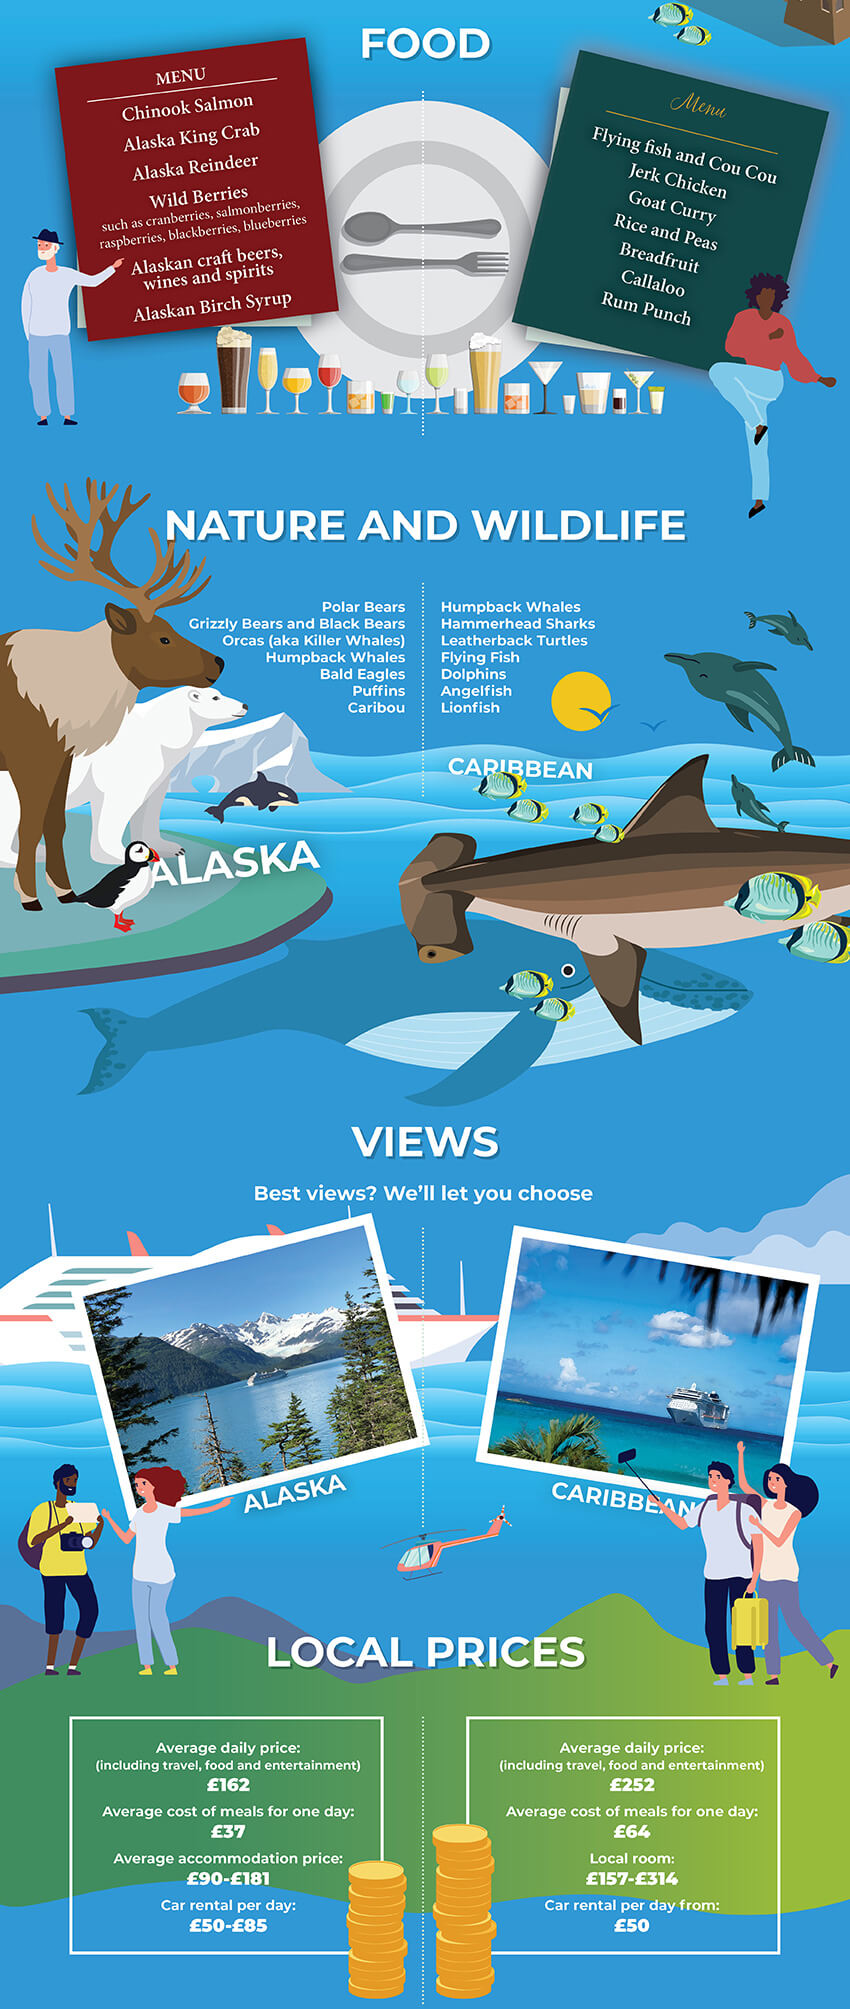 Alaska cruises vs Caribbean cruises infographic part 2